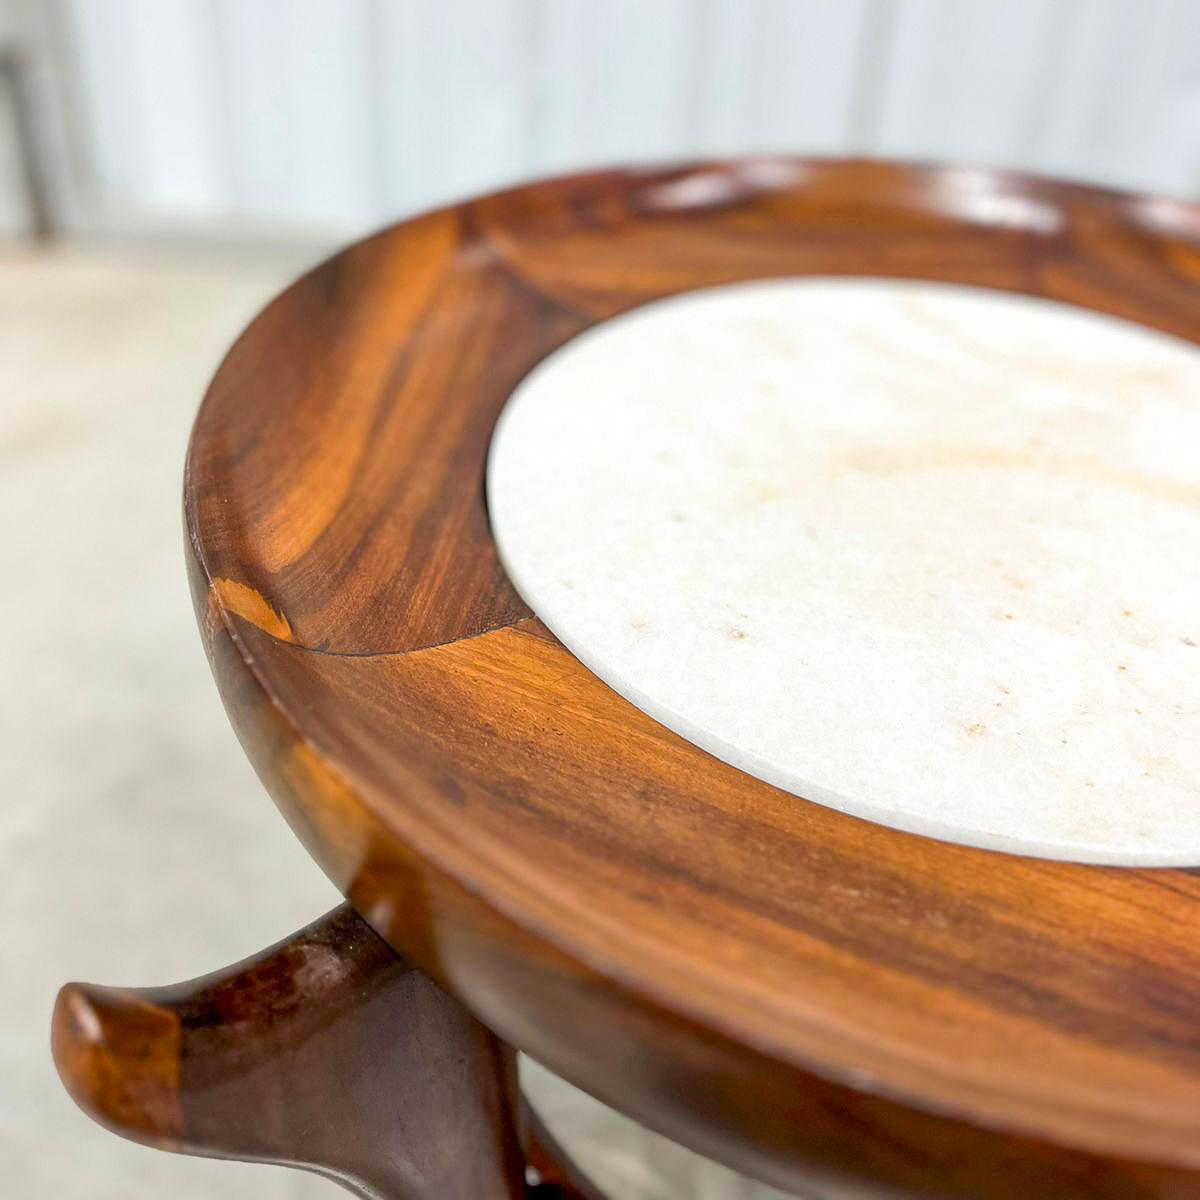 Woodwork Brazilian Modern Side Table in Hardwood & Marble by Giuseppe Scapinelli, Brazil